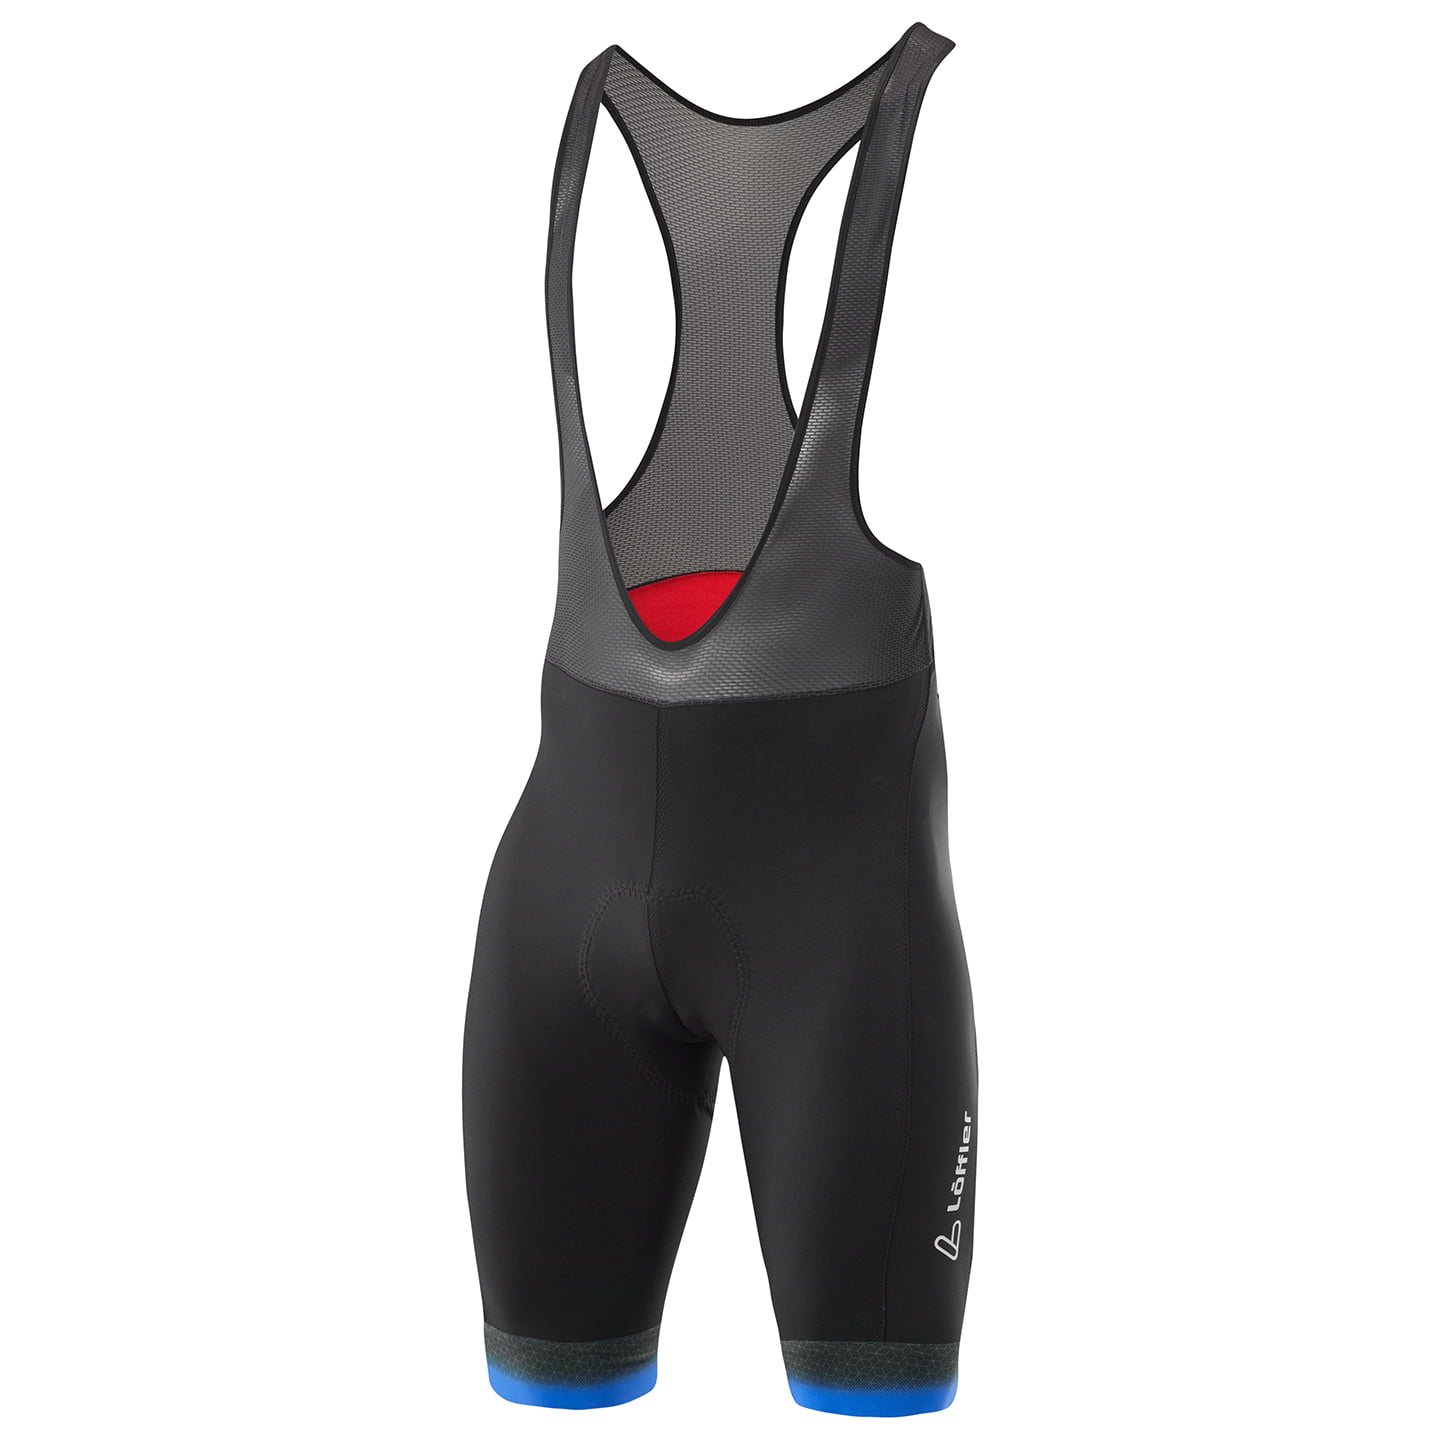 LOFFLER hotBOND Bib Shorts Bib Shorts, for men, size M, Cycle shorts, Cycling clothing